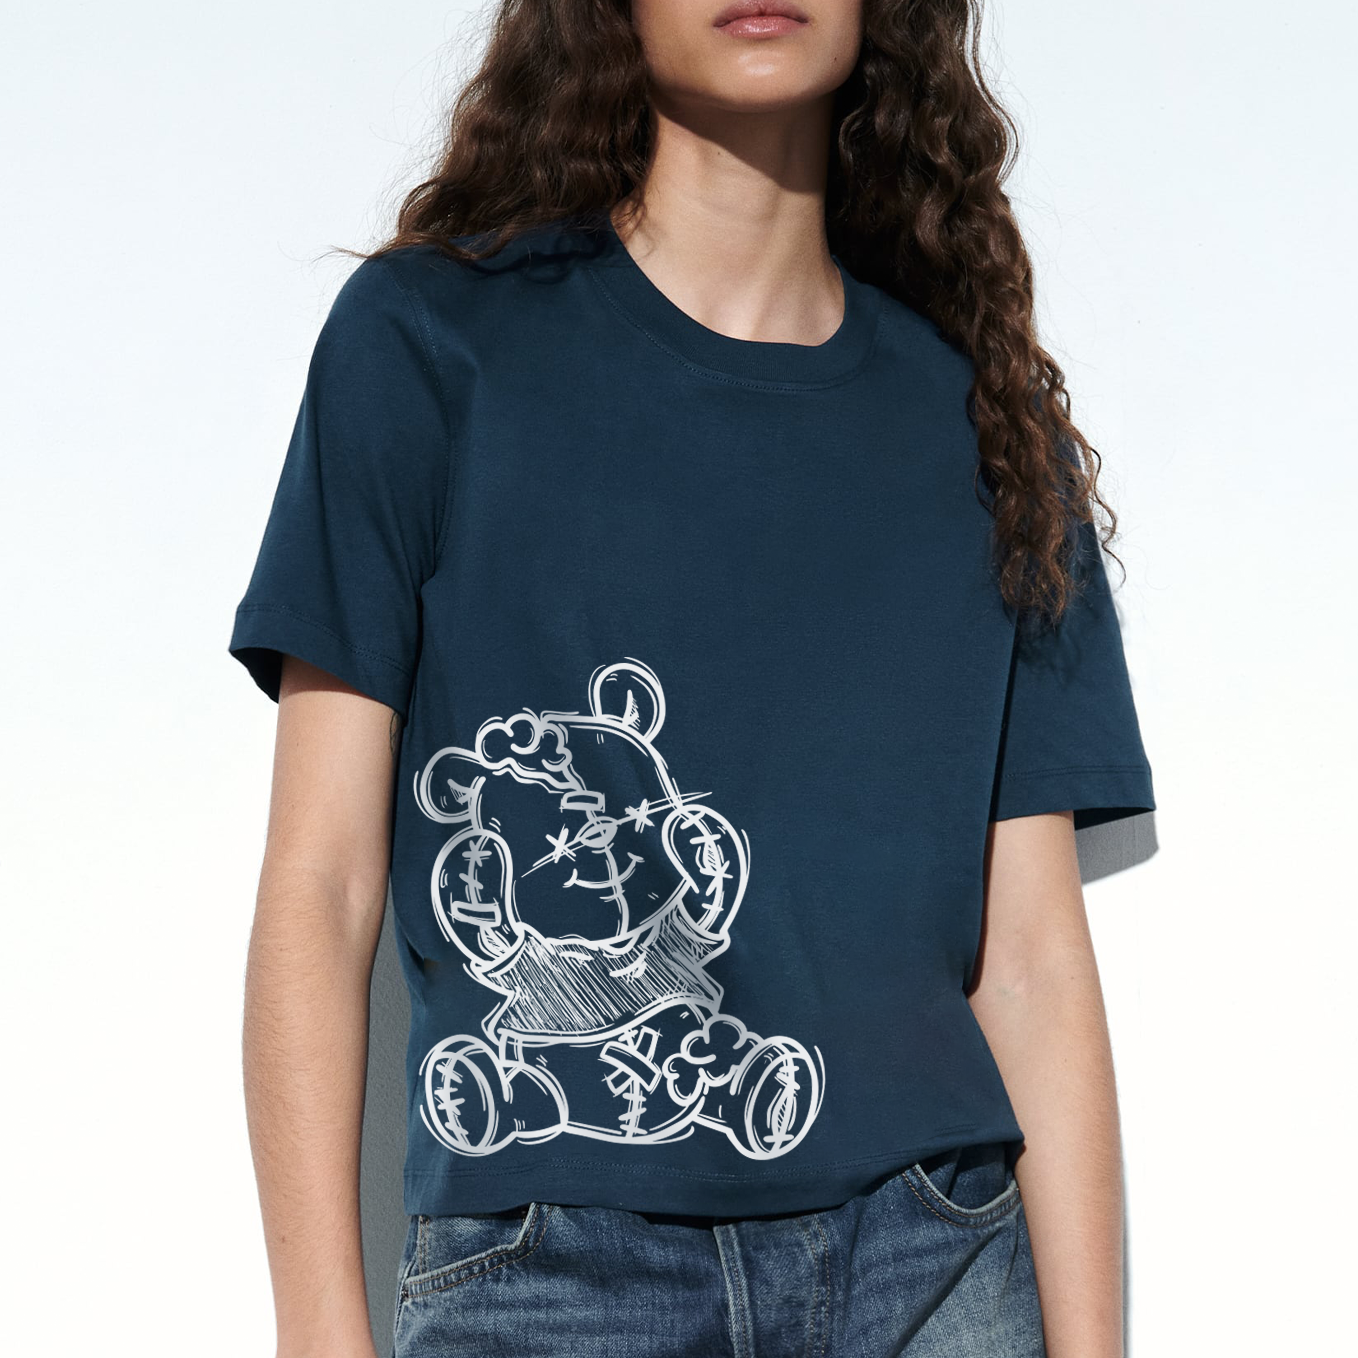 T-shirt "Teddy Bear"